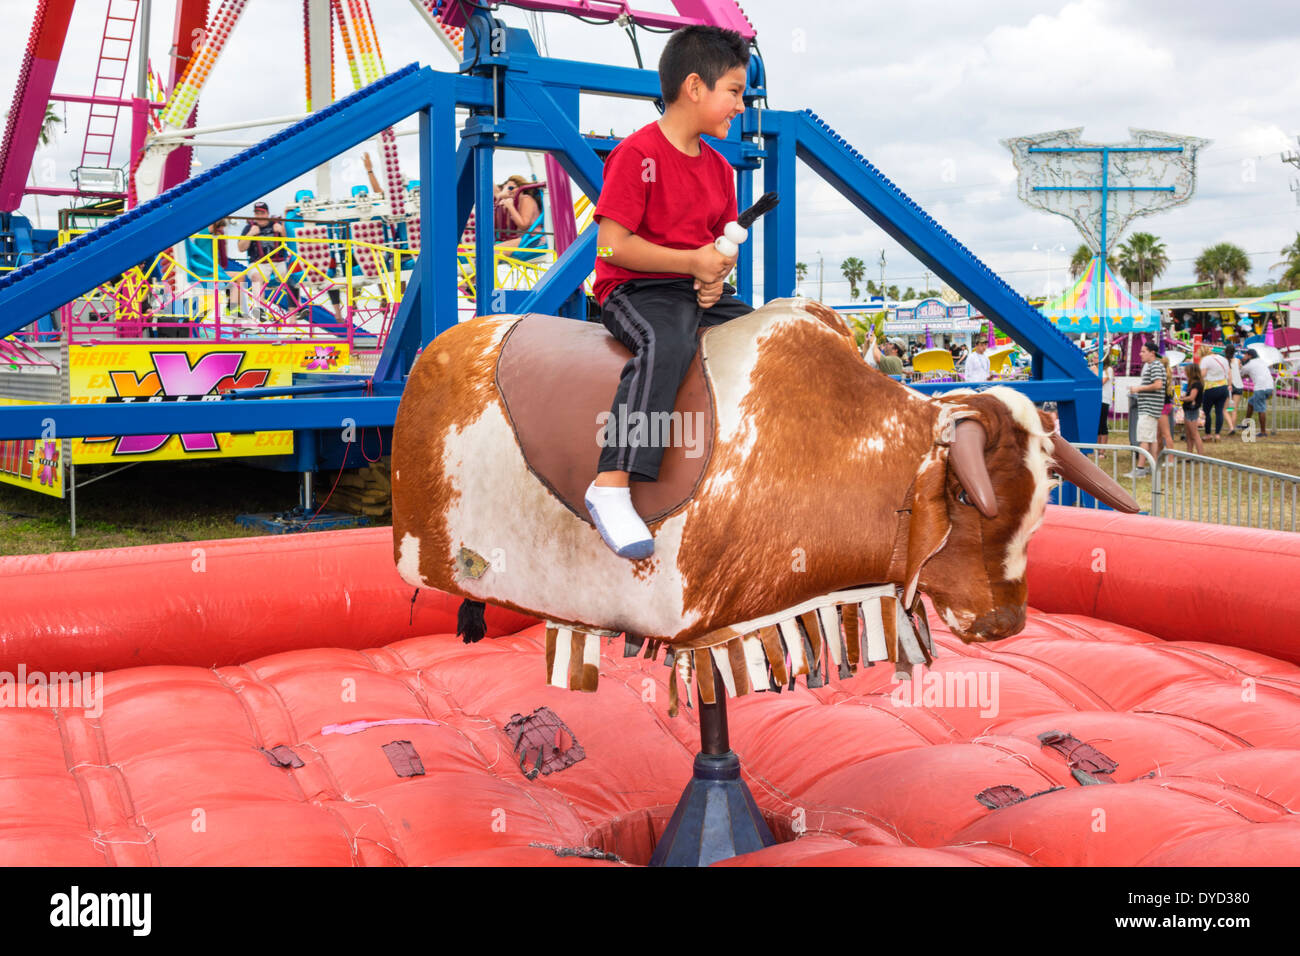 Everglades City Florida,Seafood Festival,annual community event,carnival game,mechanical bull,riding,Hispanic Latin Latino ethnic immigrant immi Stock Photo